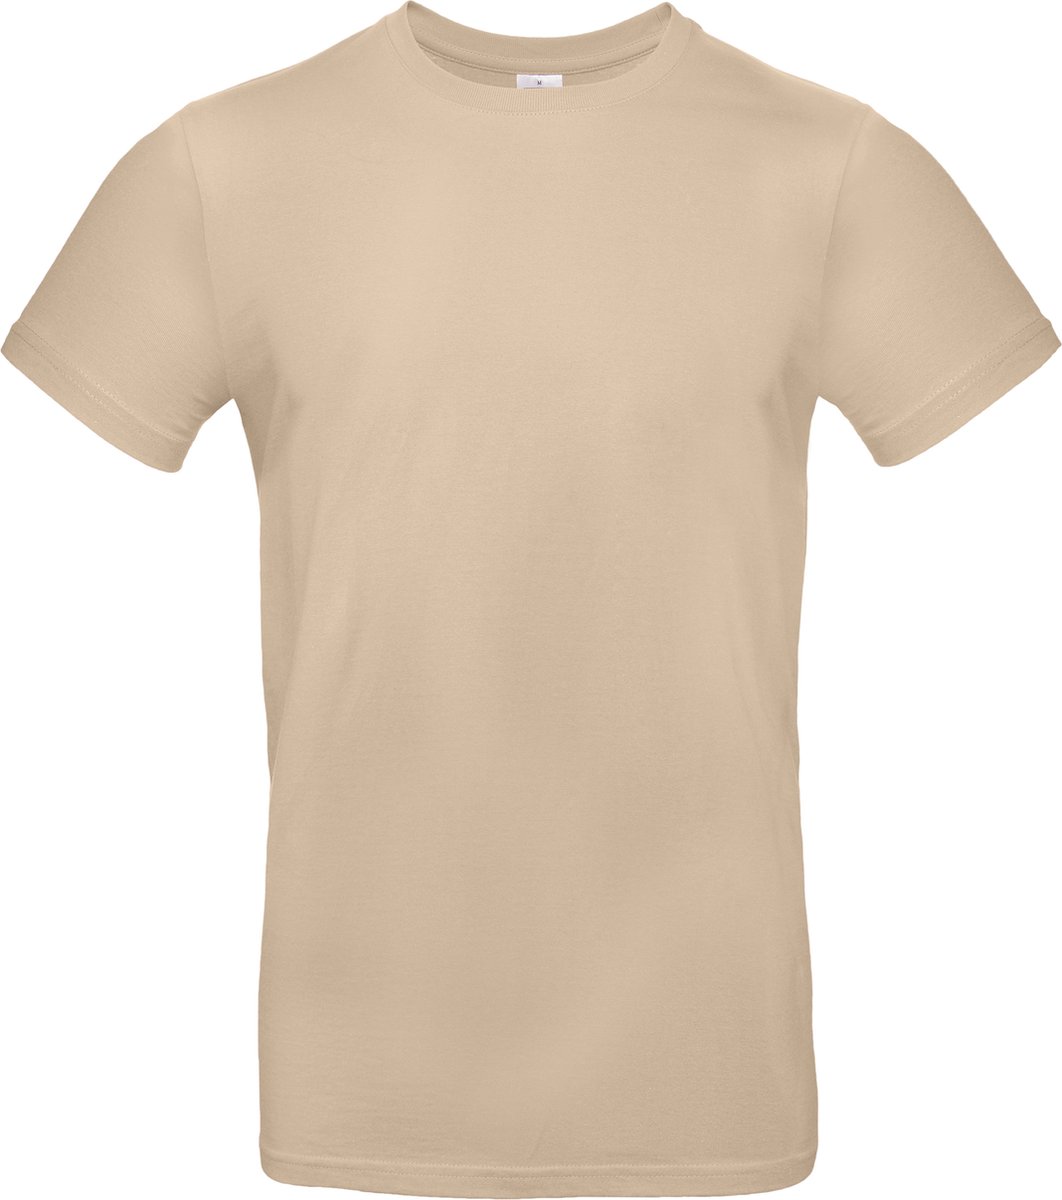 B&C Exact 190 T-Shirt - Ronde Hals - Unisex - Sand / Beige - Small